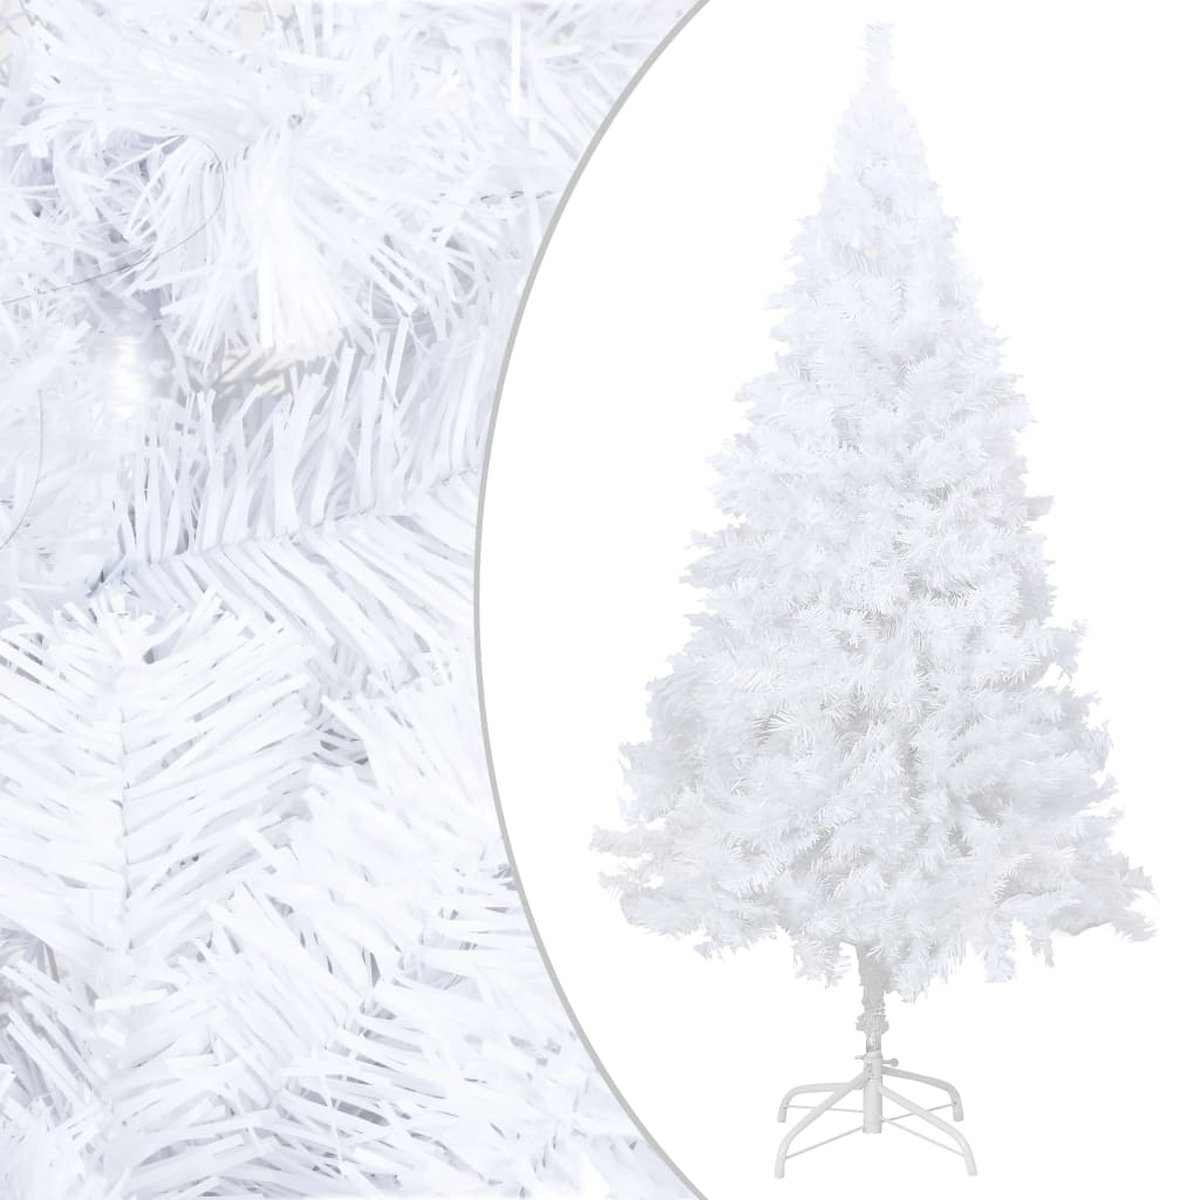 VidaLife Kunstkerstboom met dikke takken 240 cm PVC wit